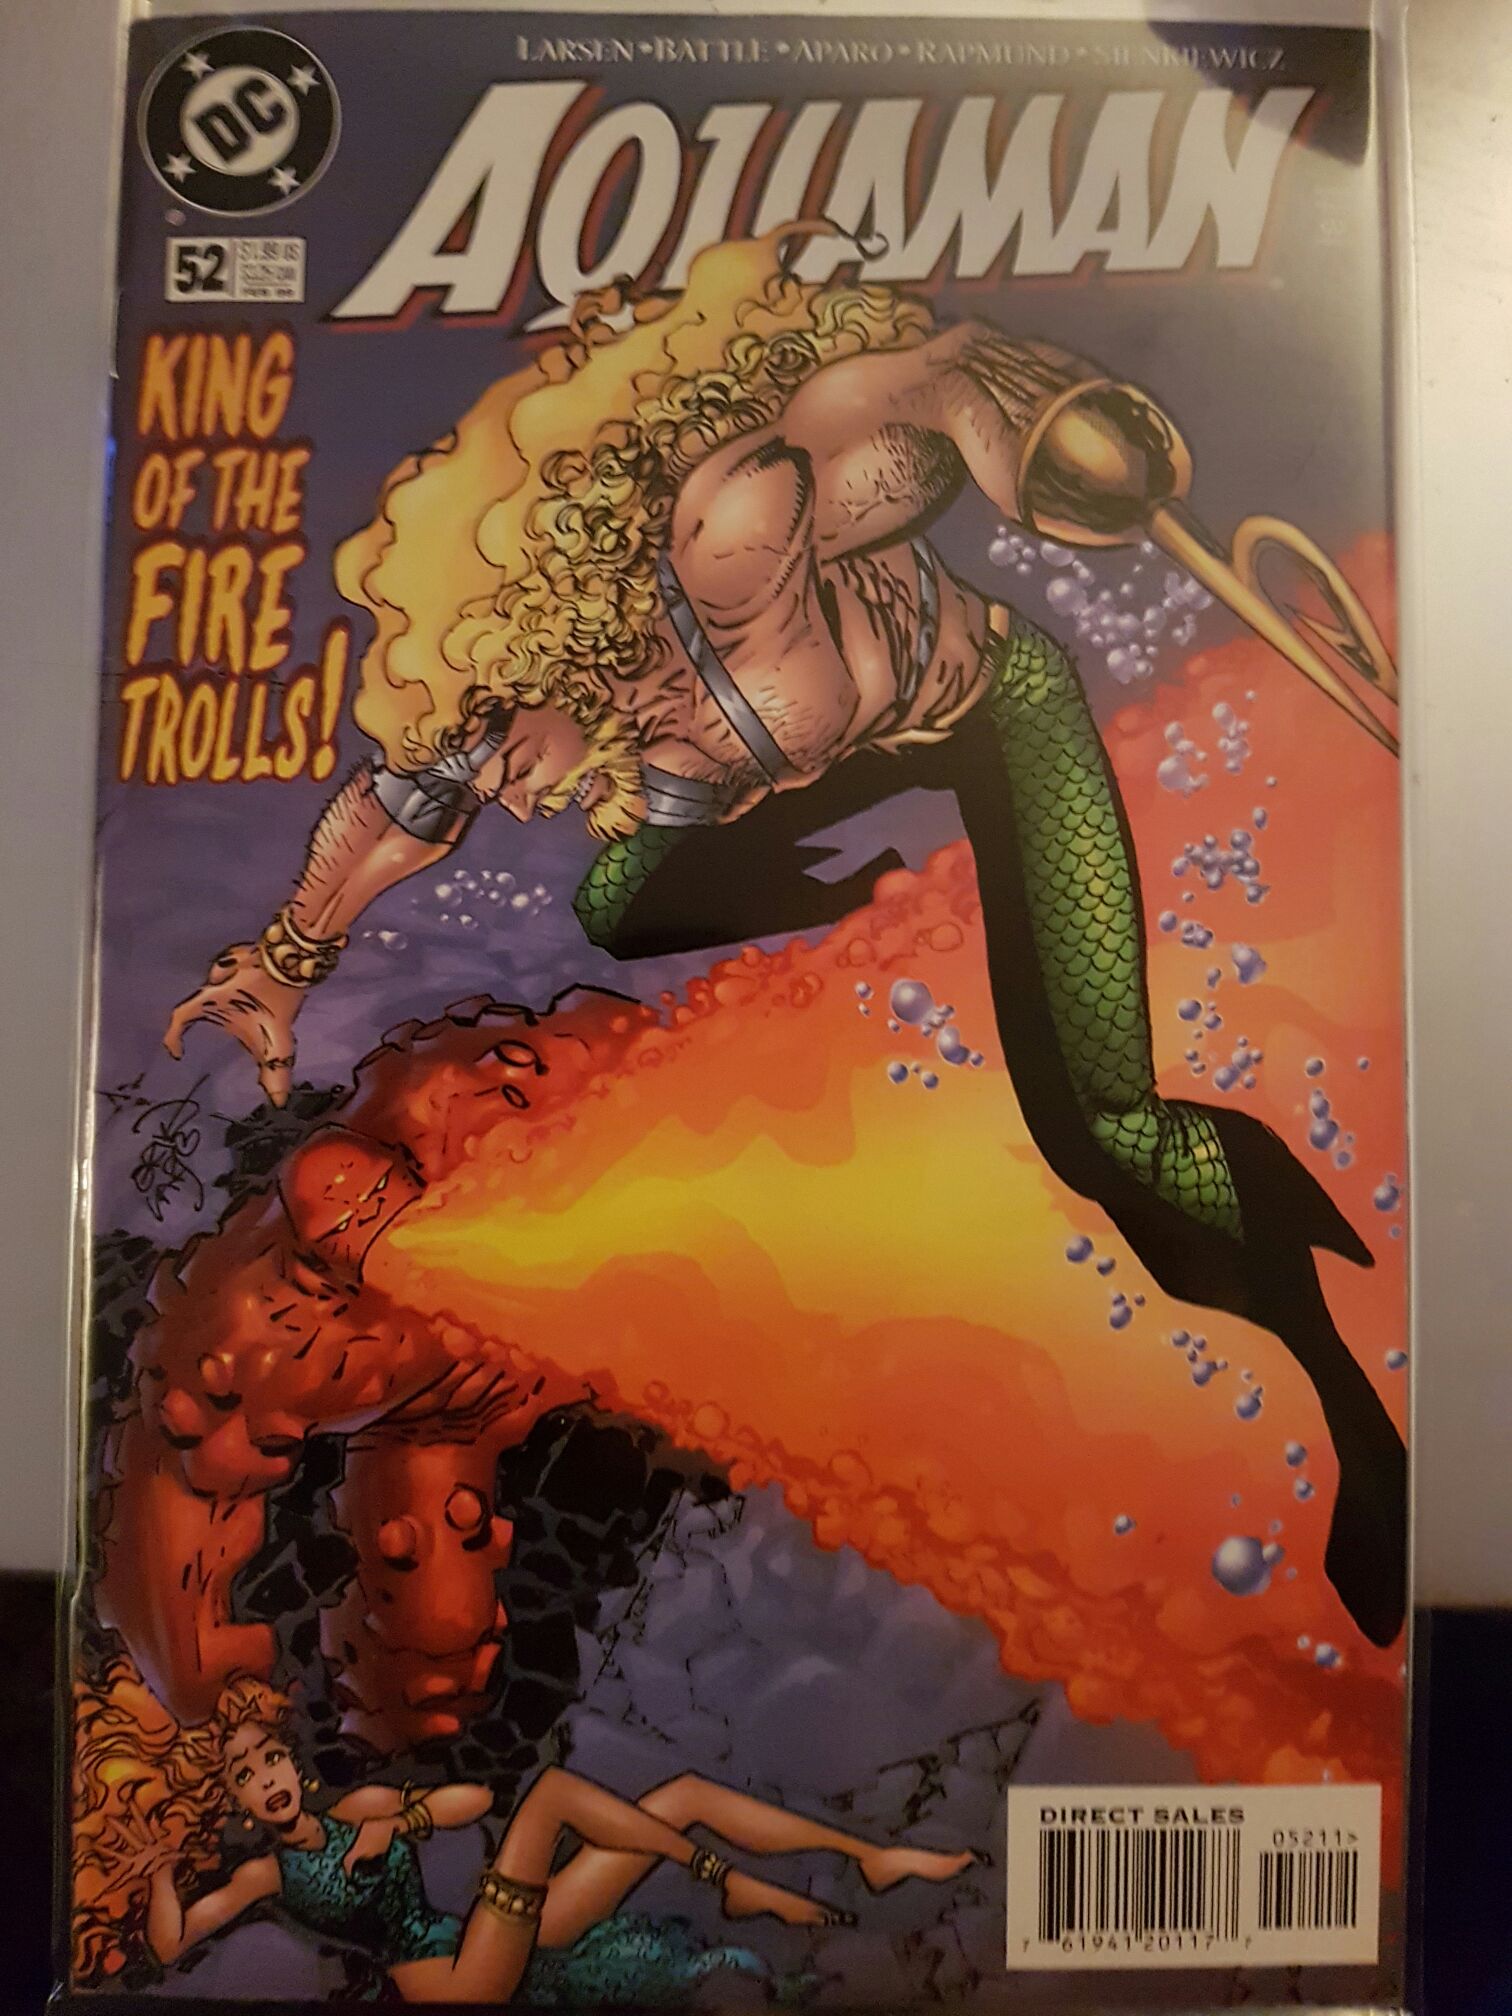 Aquaman  (52 - Feb 1999) comic book collectible - Main Image 1